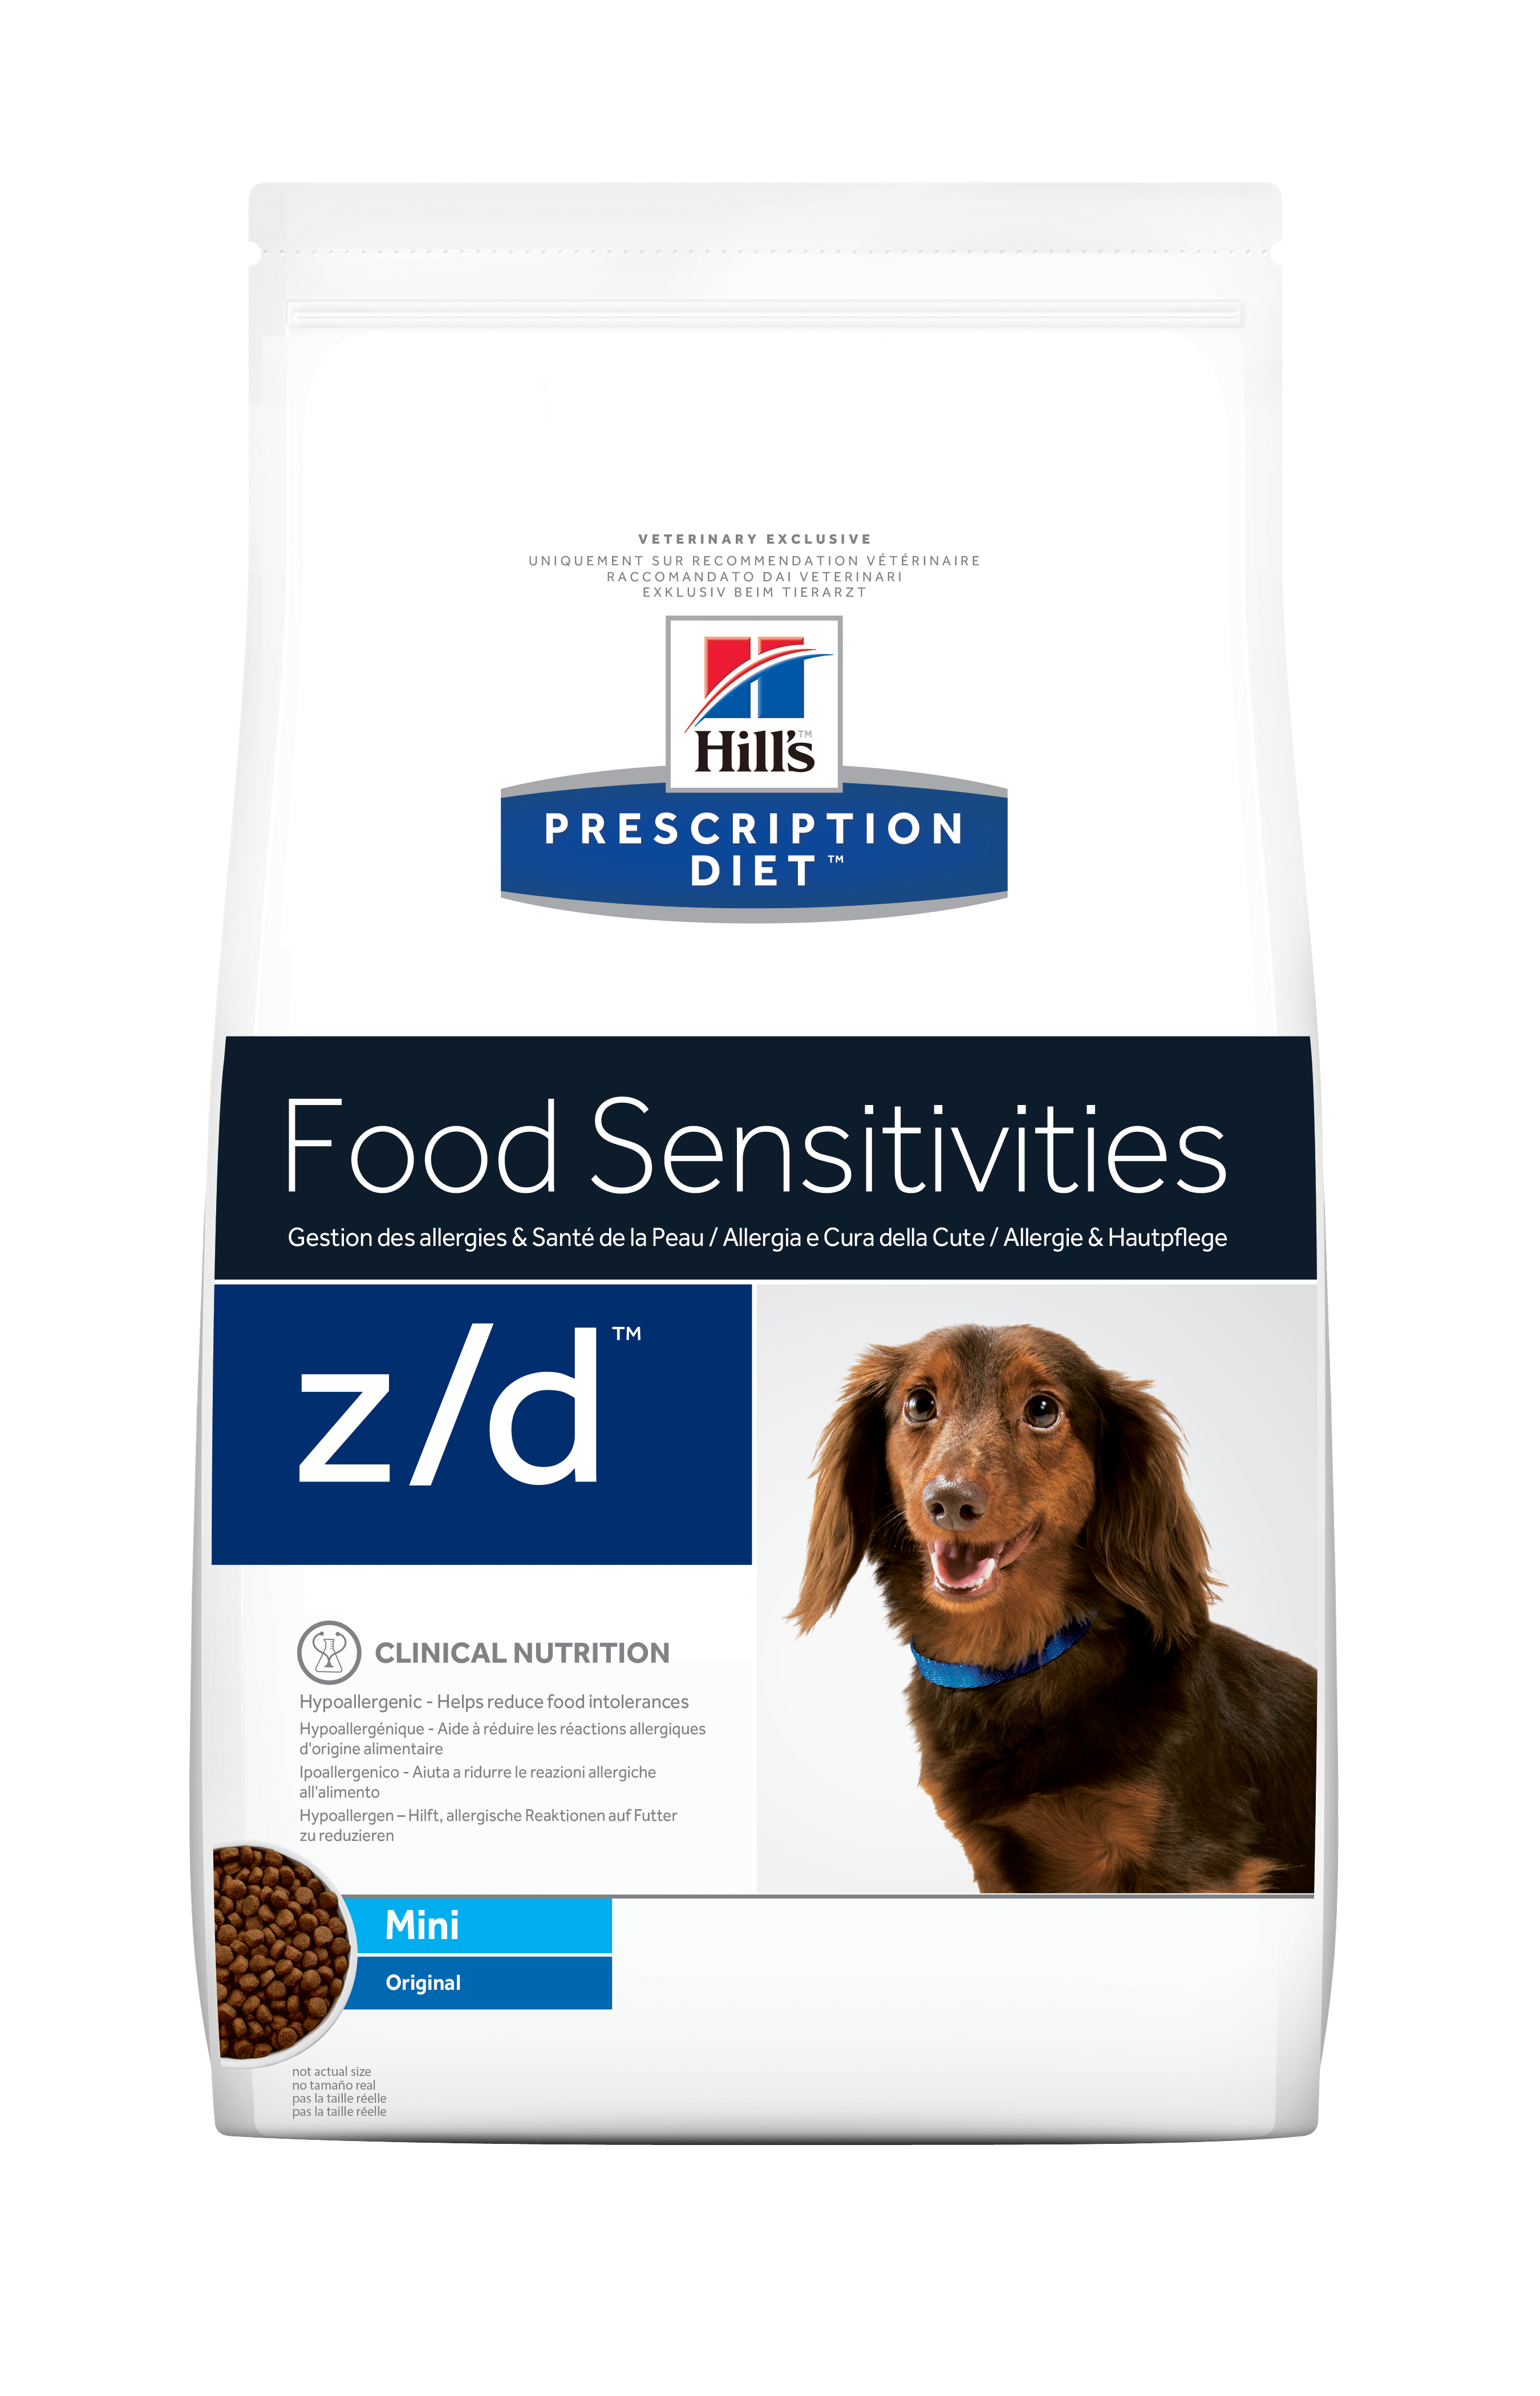 Hill's Prescription Diet Food Sensitivities Z/d Mini